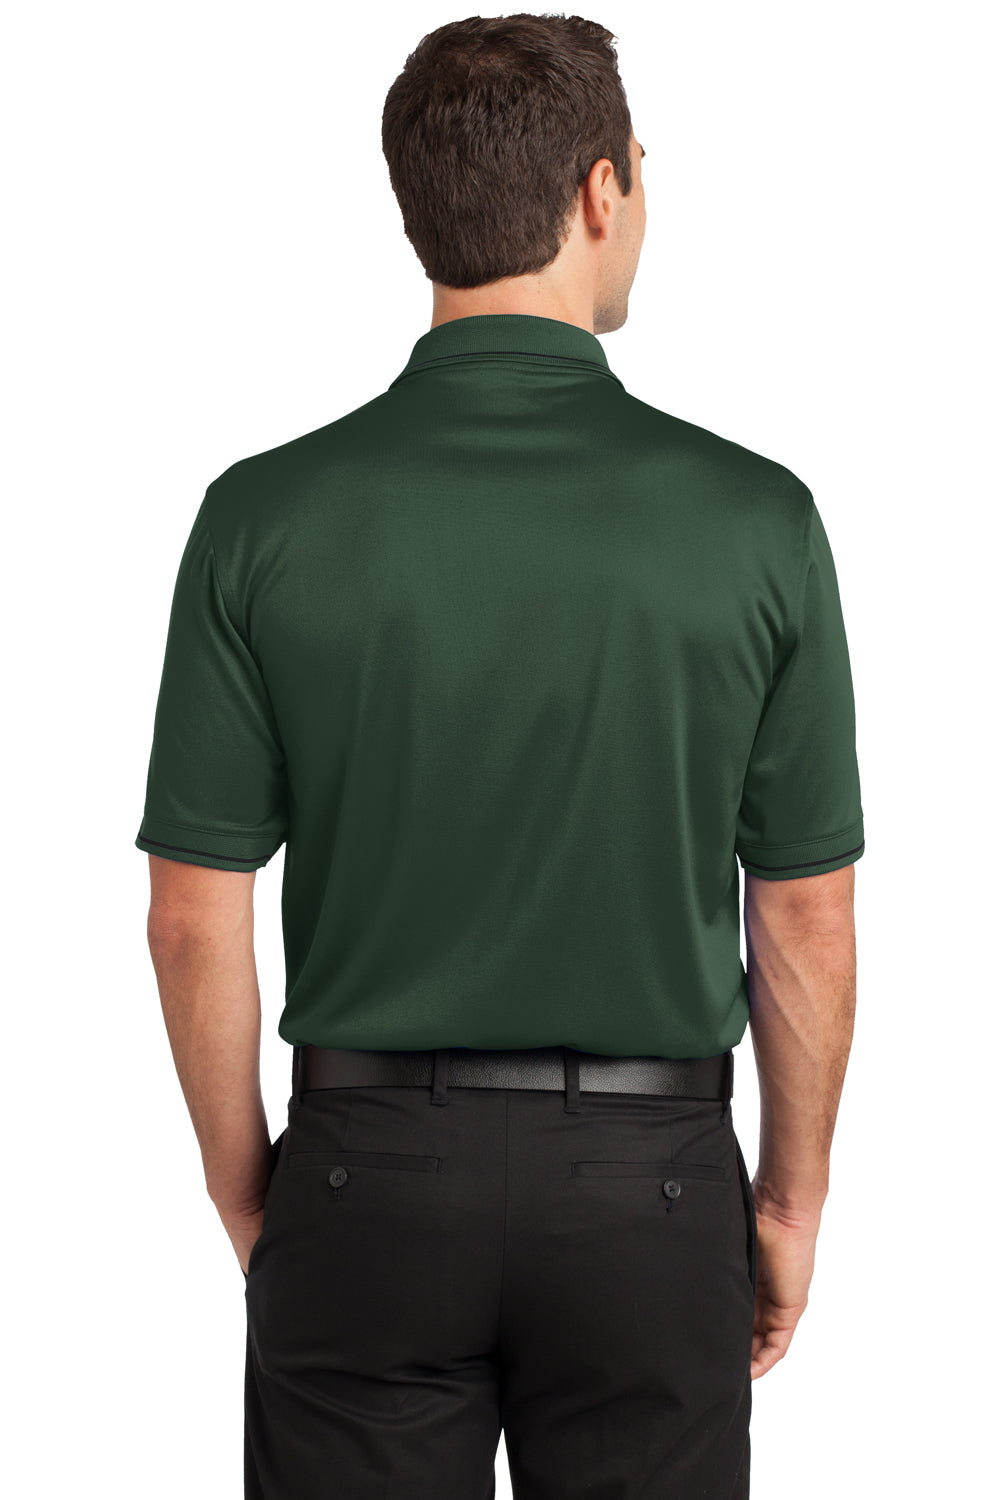 CornerStone CS415 Mens Select Moisture Wicking Short Sleeve Polo Shirt w/ Pocket Dark Green Back